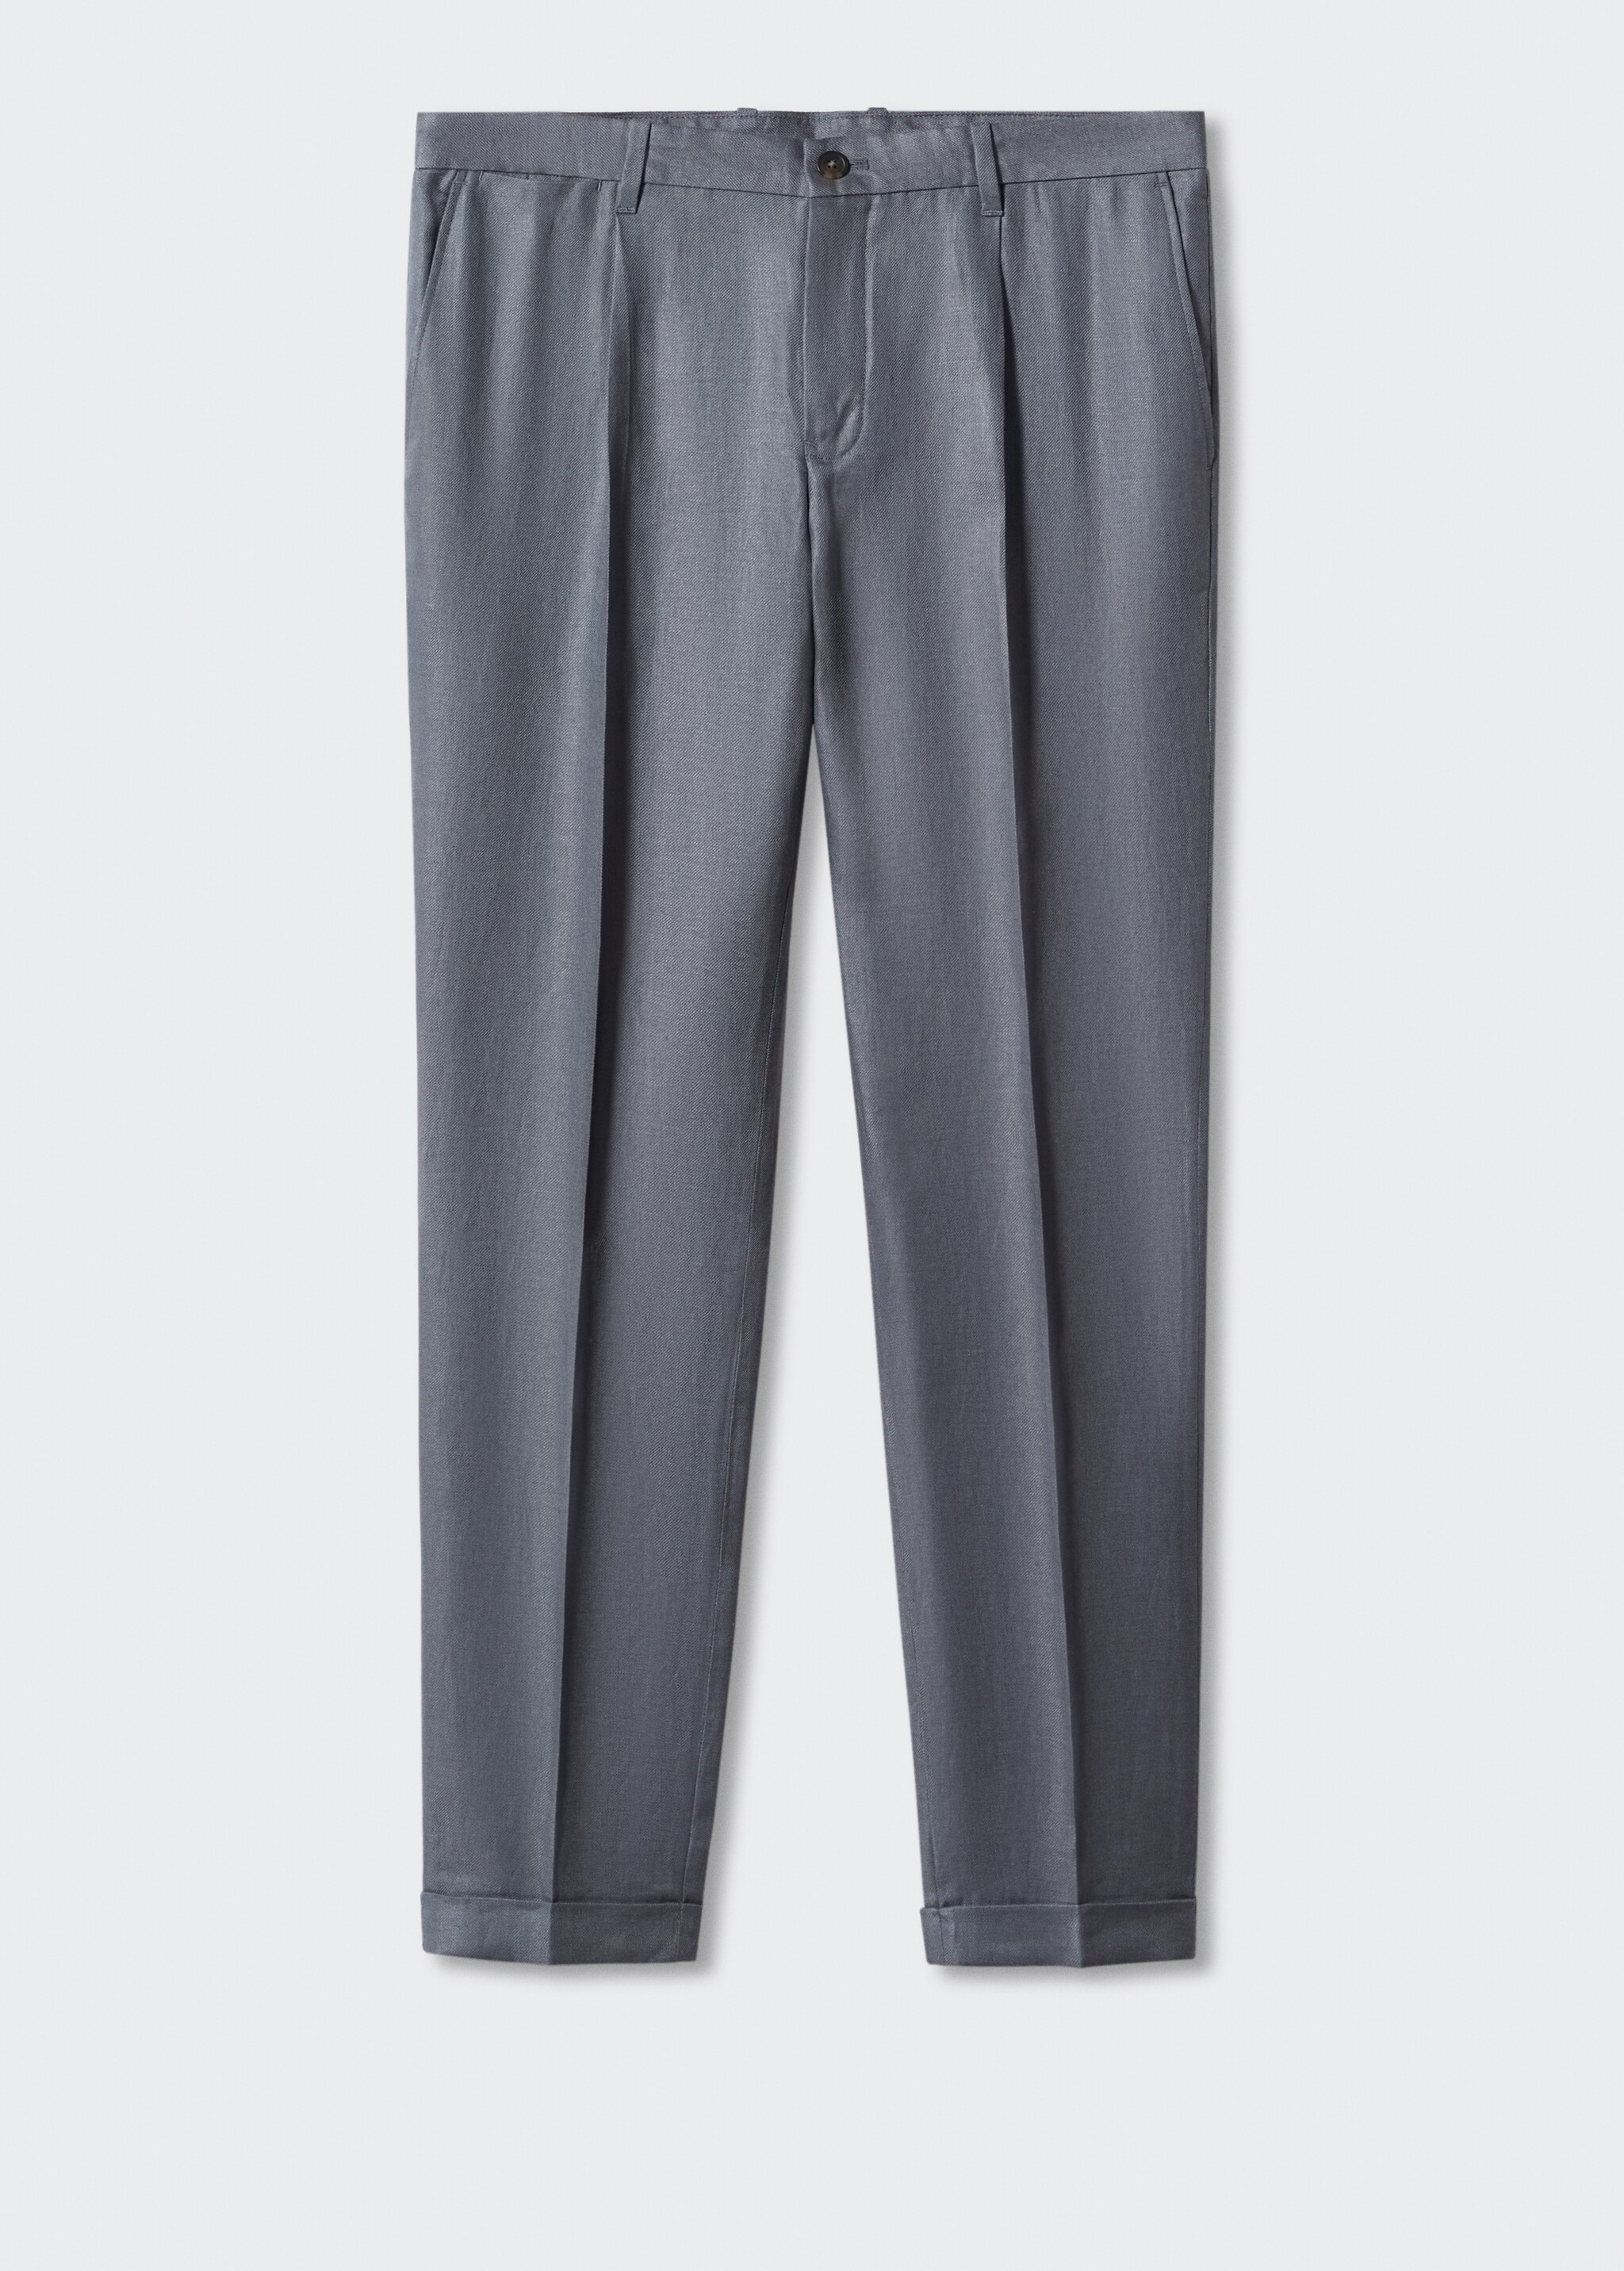 100% linen regular-fit pants - Article without model